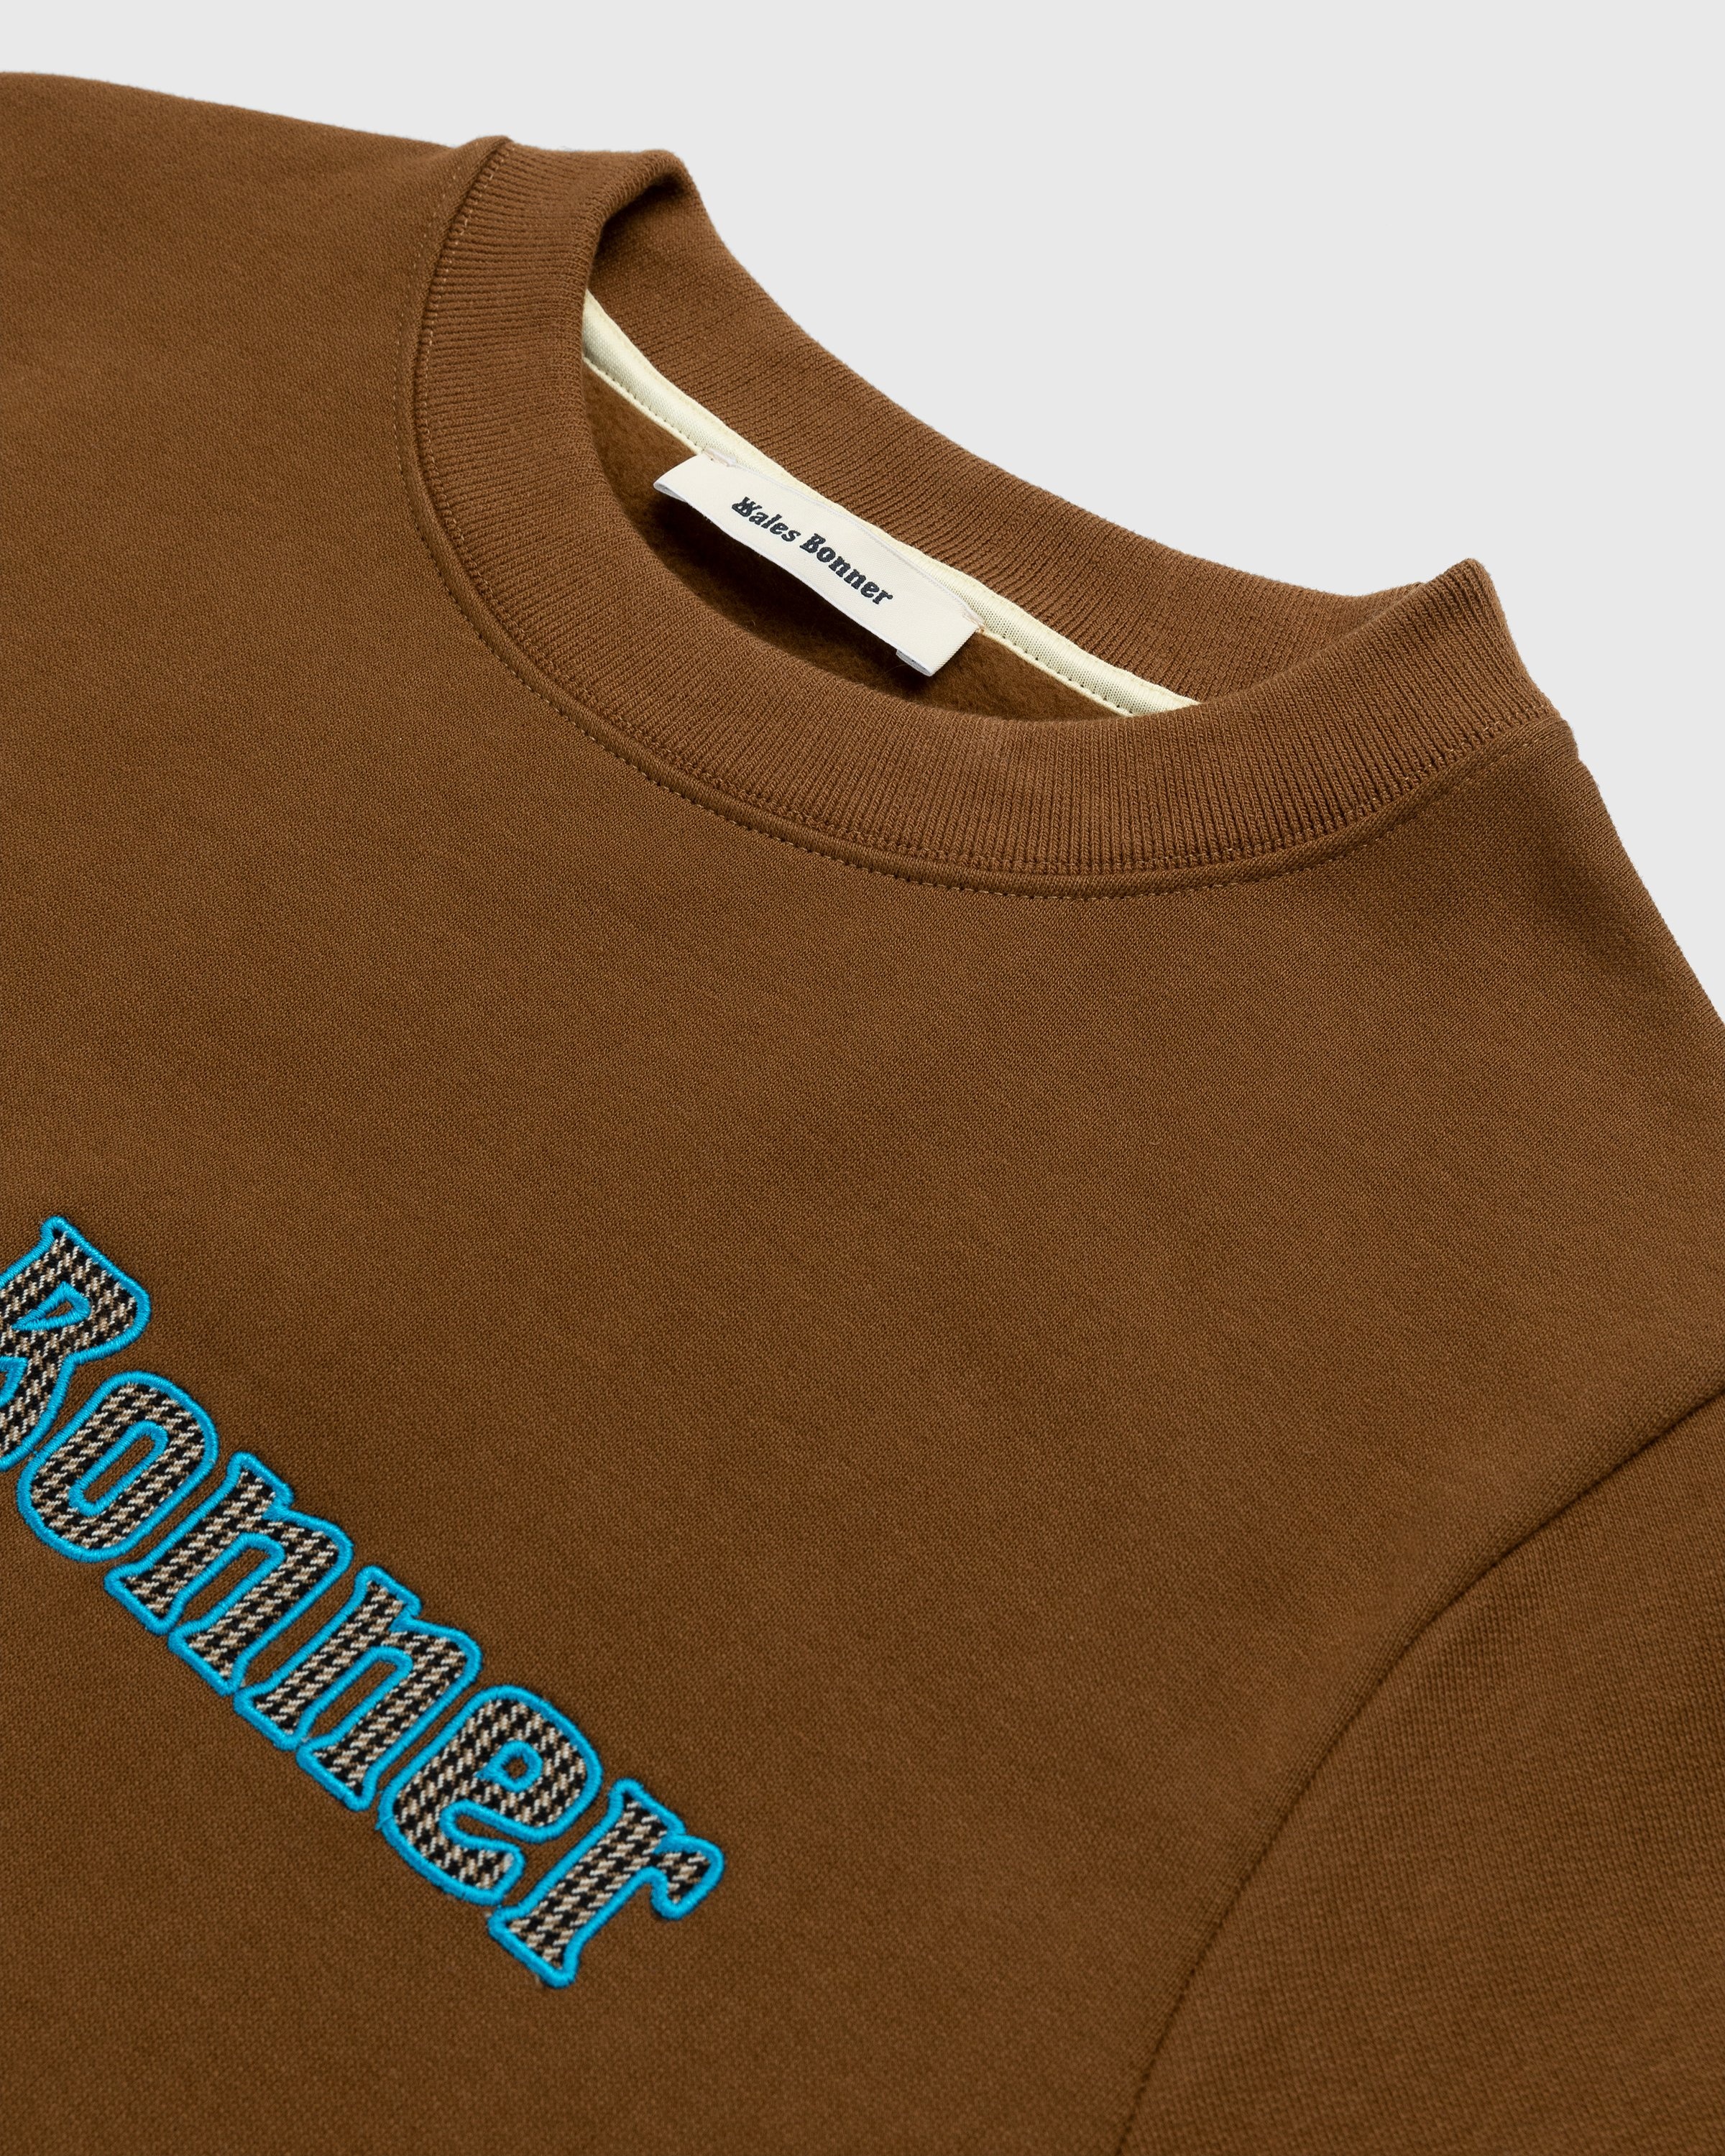 Wales Bonner – Original Sweatshirt Brown | Highsnobiety Shop